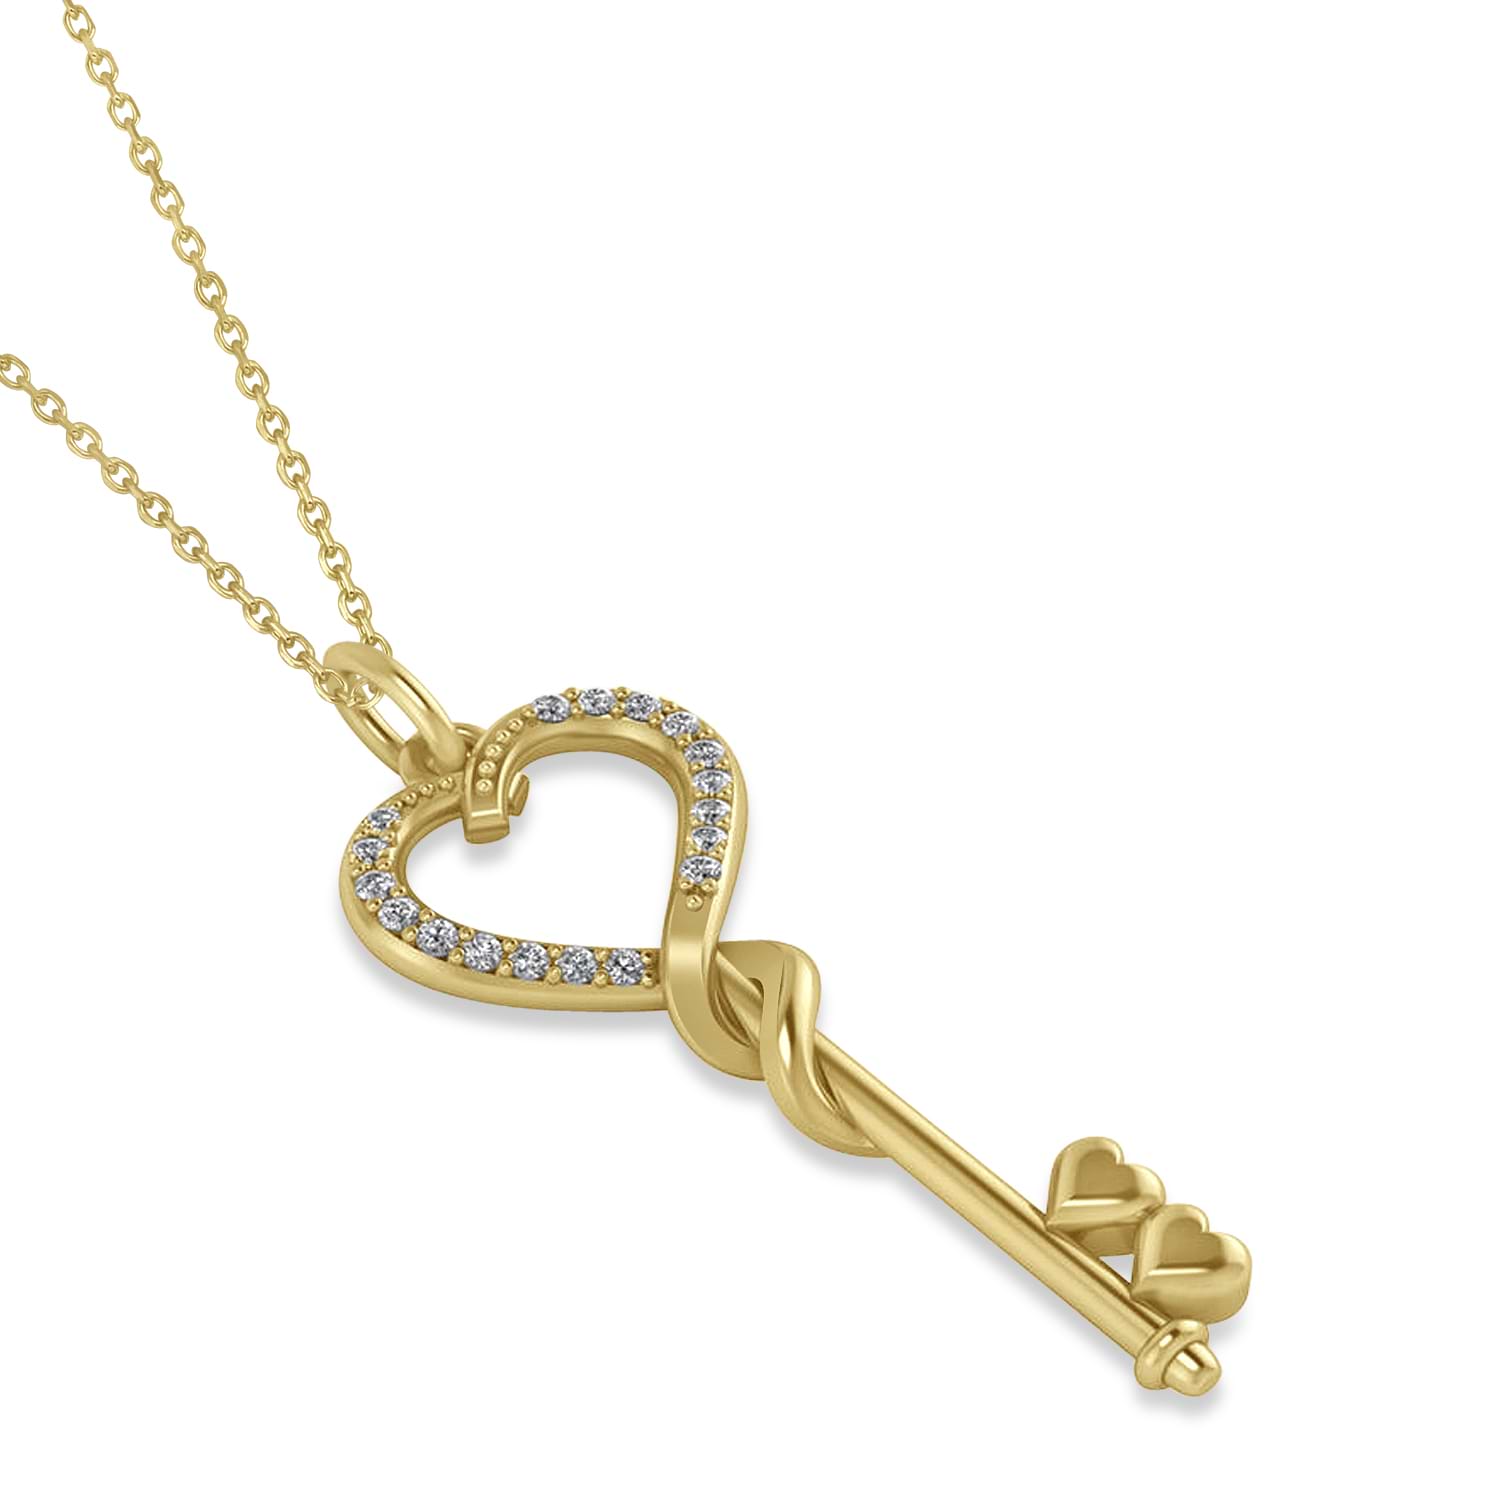 Diamond Heart Key Pendant Necklace 14k Yellow Gold (0.18ct)